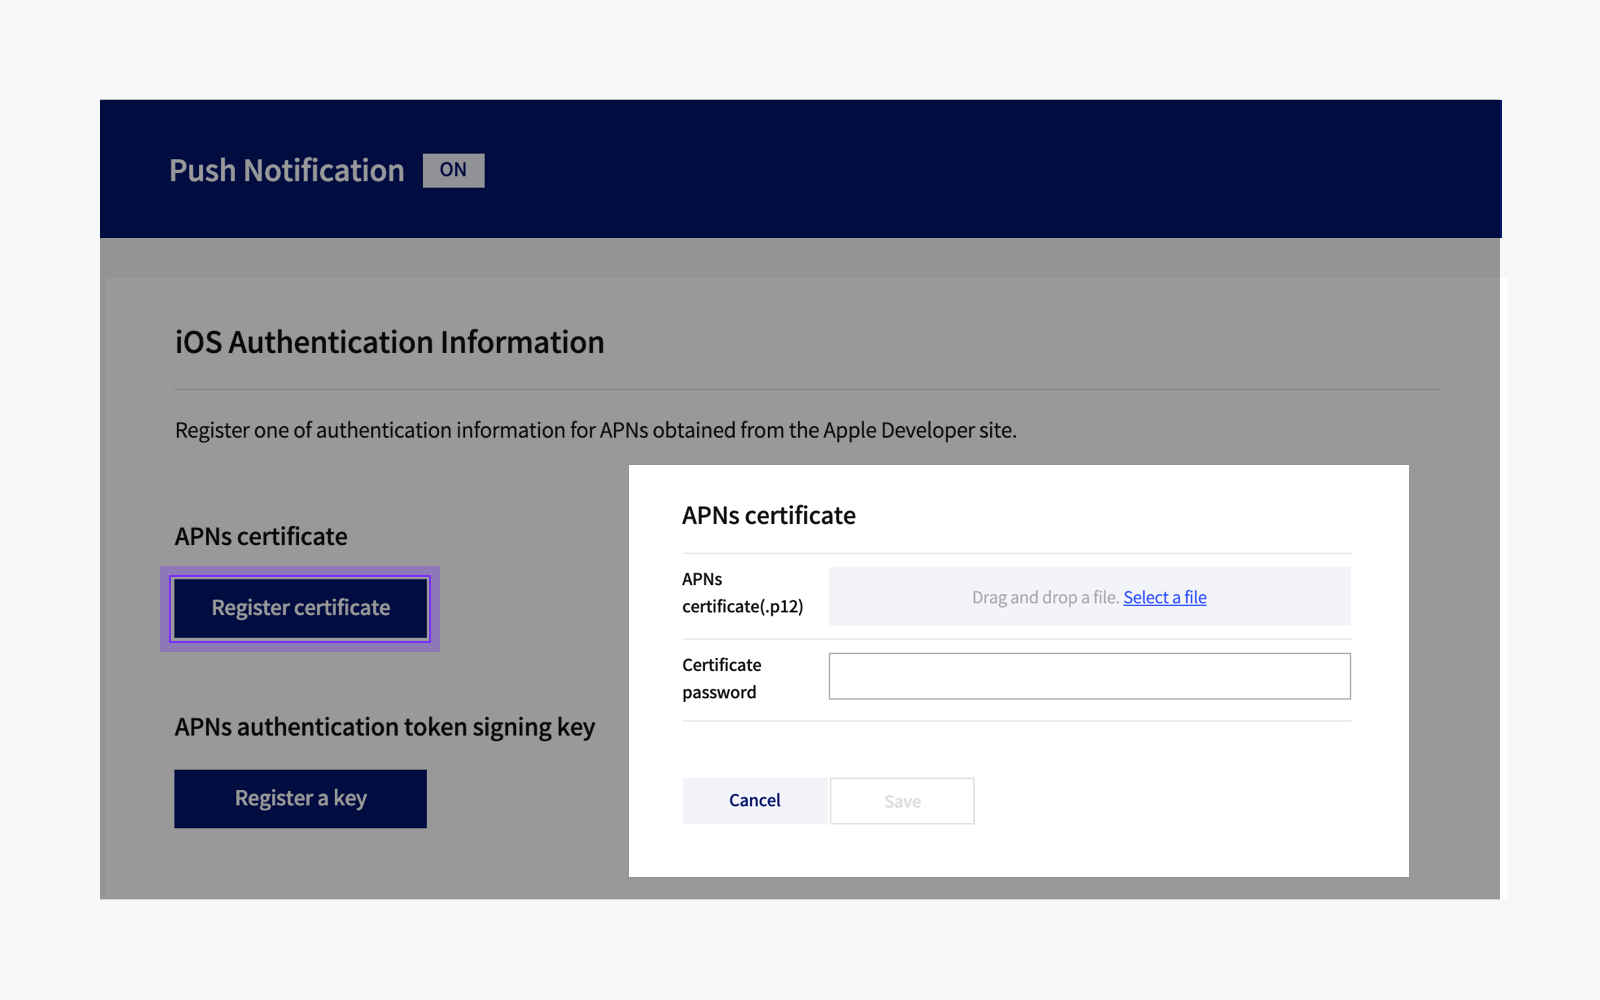 How to register APNs certificate